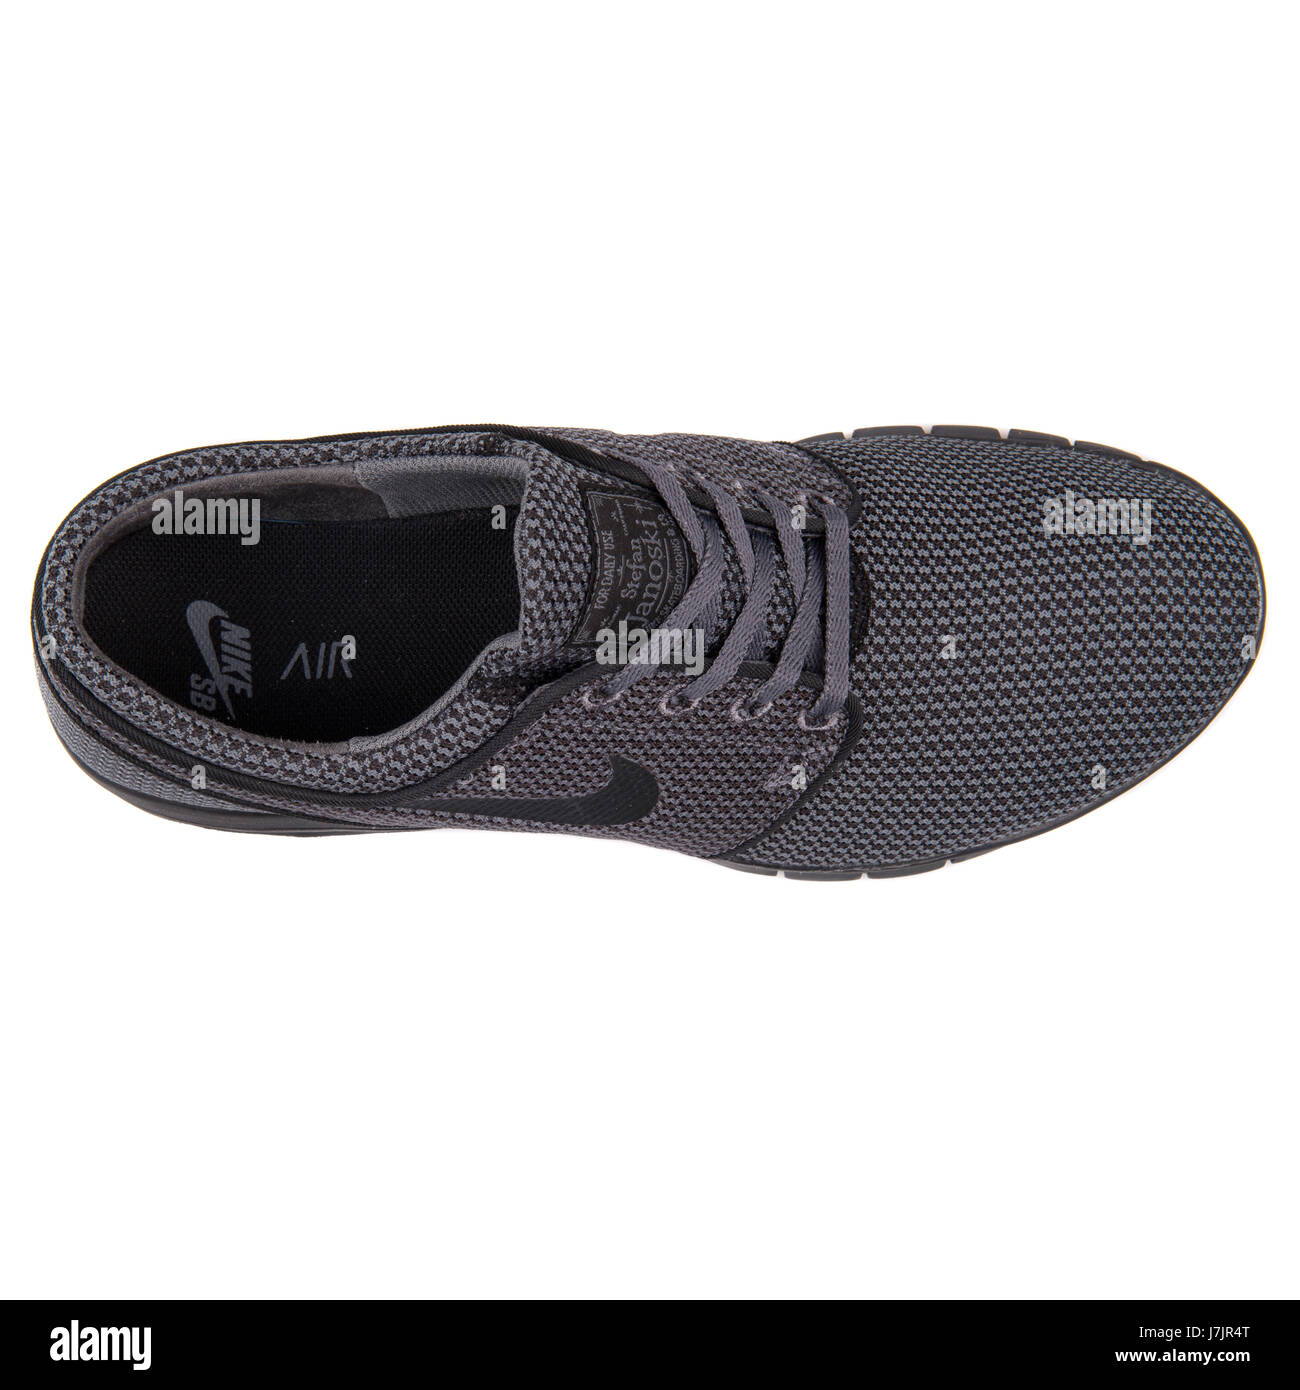 Stefan Janoski Nike Max Black Skate Sneakers - 631303-006 Fotografía de